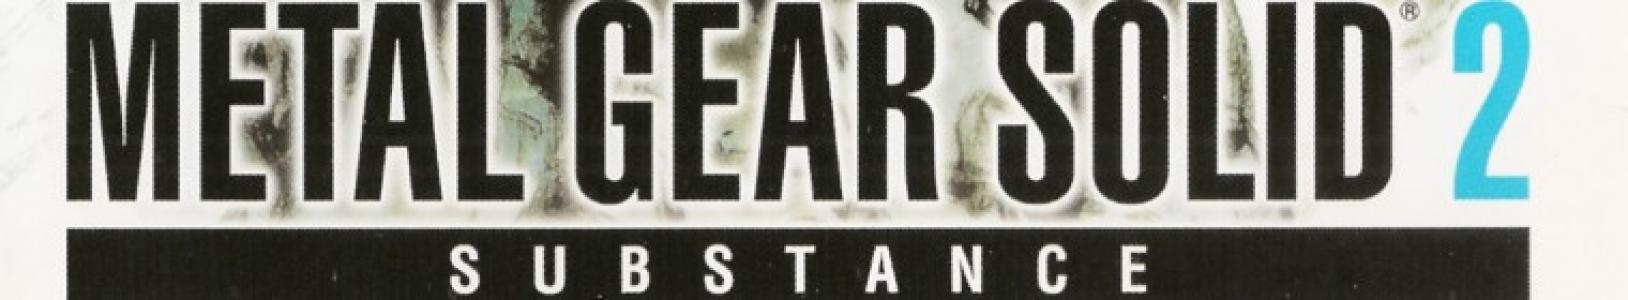 Metal Gear Solid 2: Substance banner